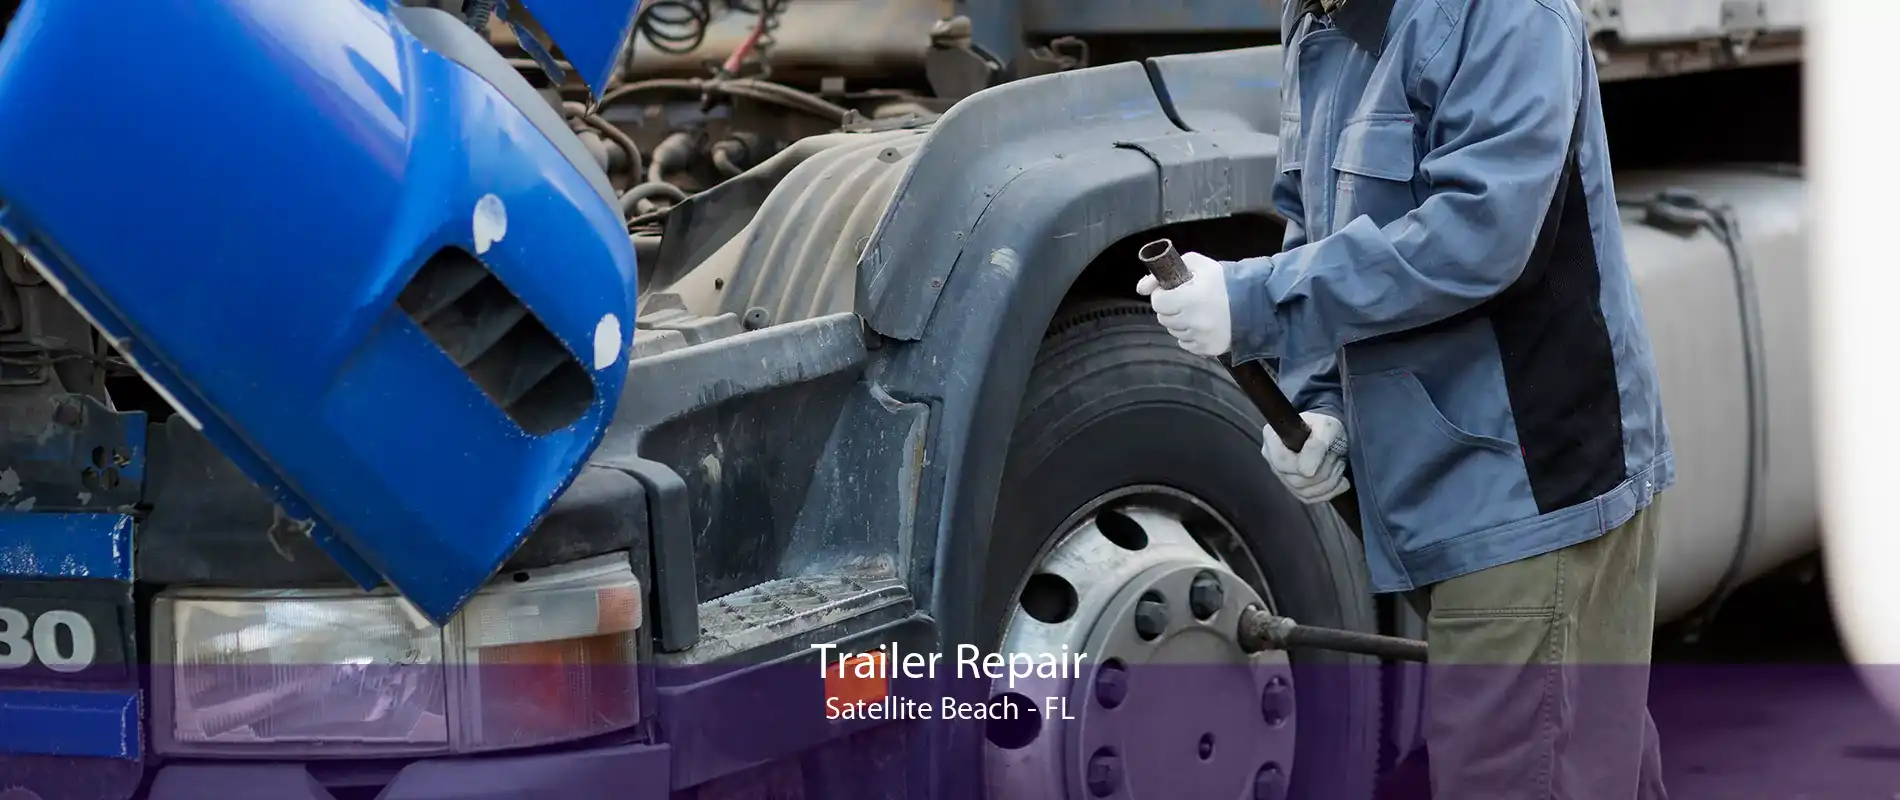 Trailer Repair Satellite Beach - FL